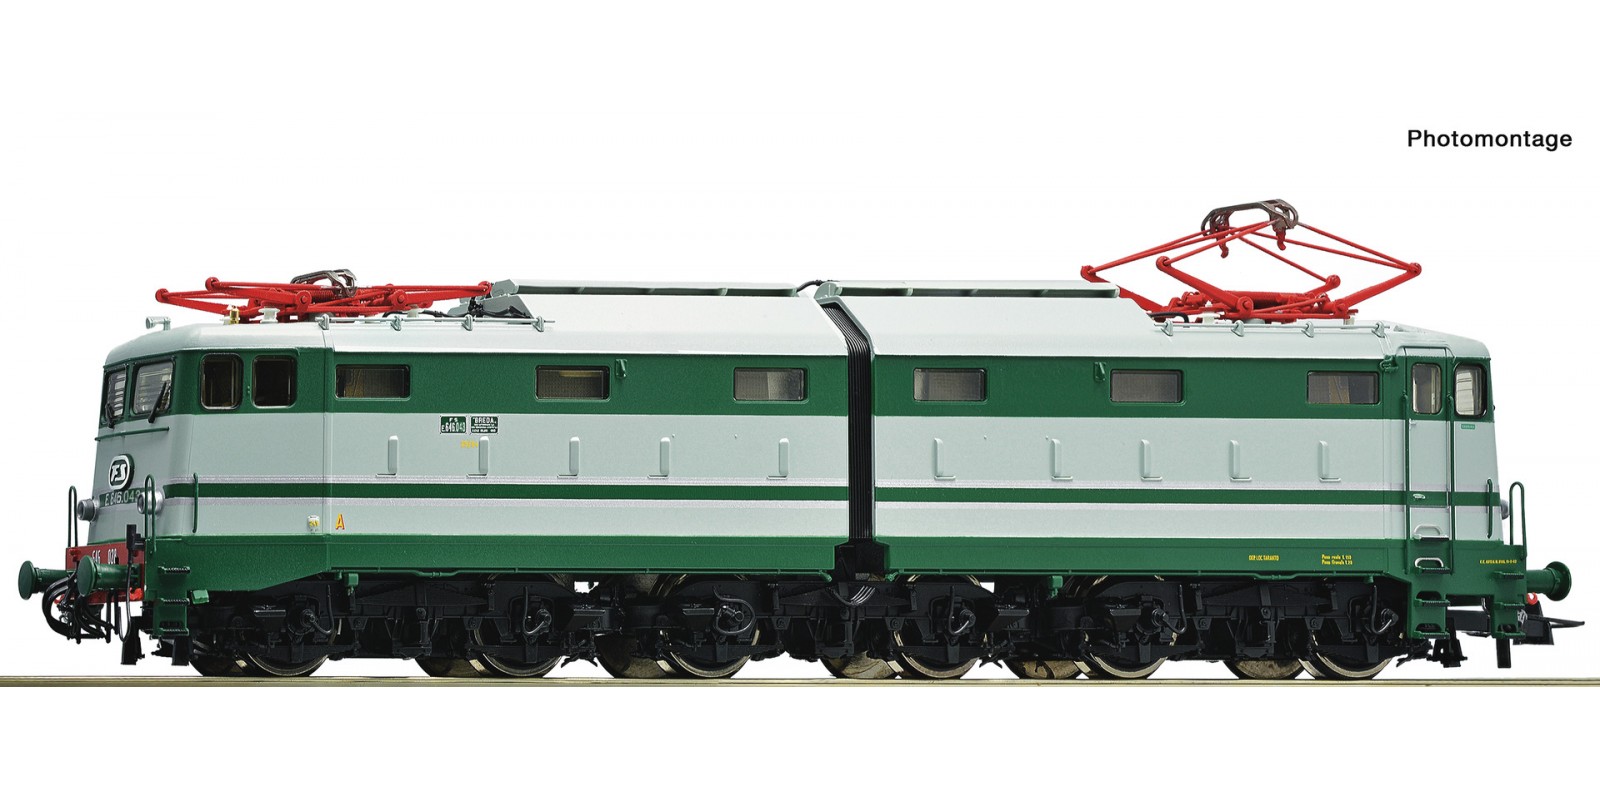 RO73165 Electric locomotive E.646.043